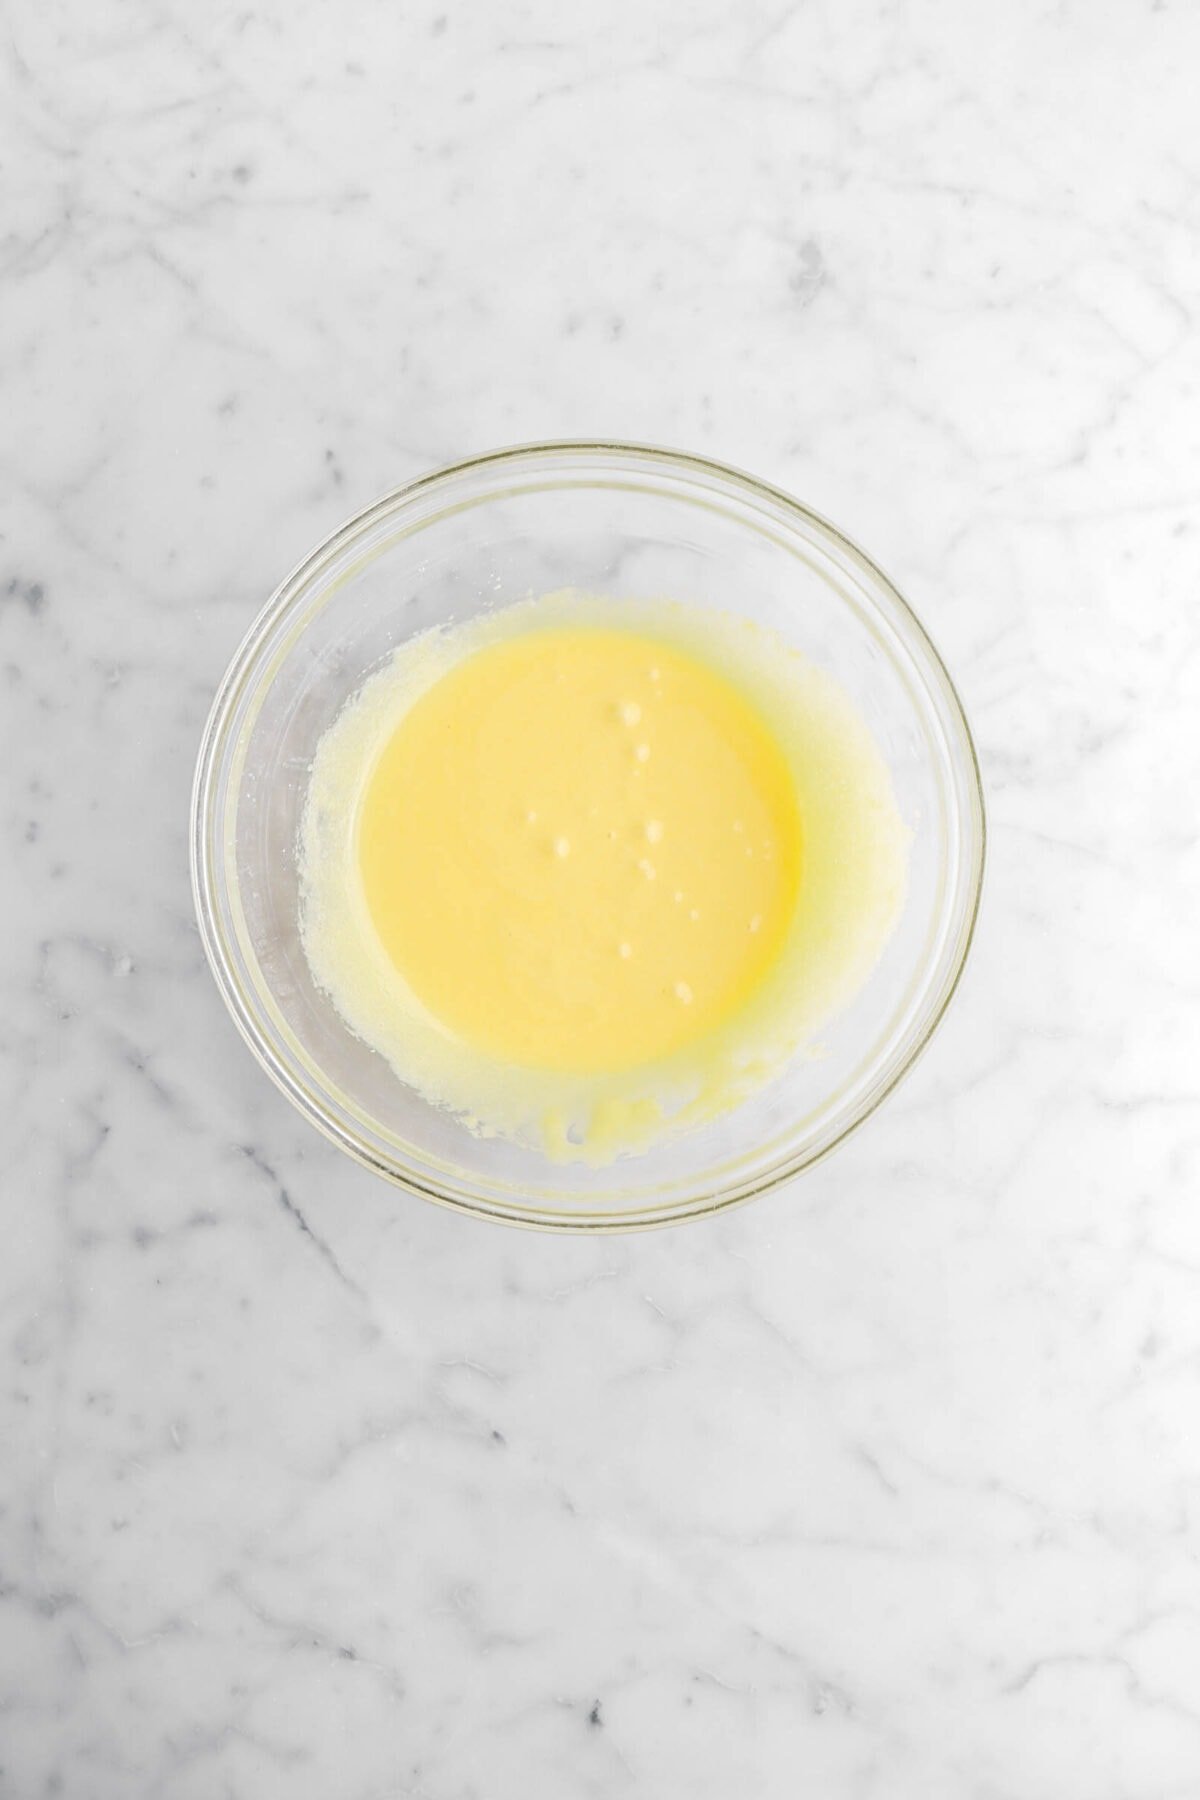 egg yolk mixture in glass bowl.